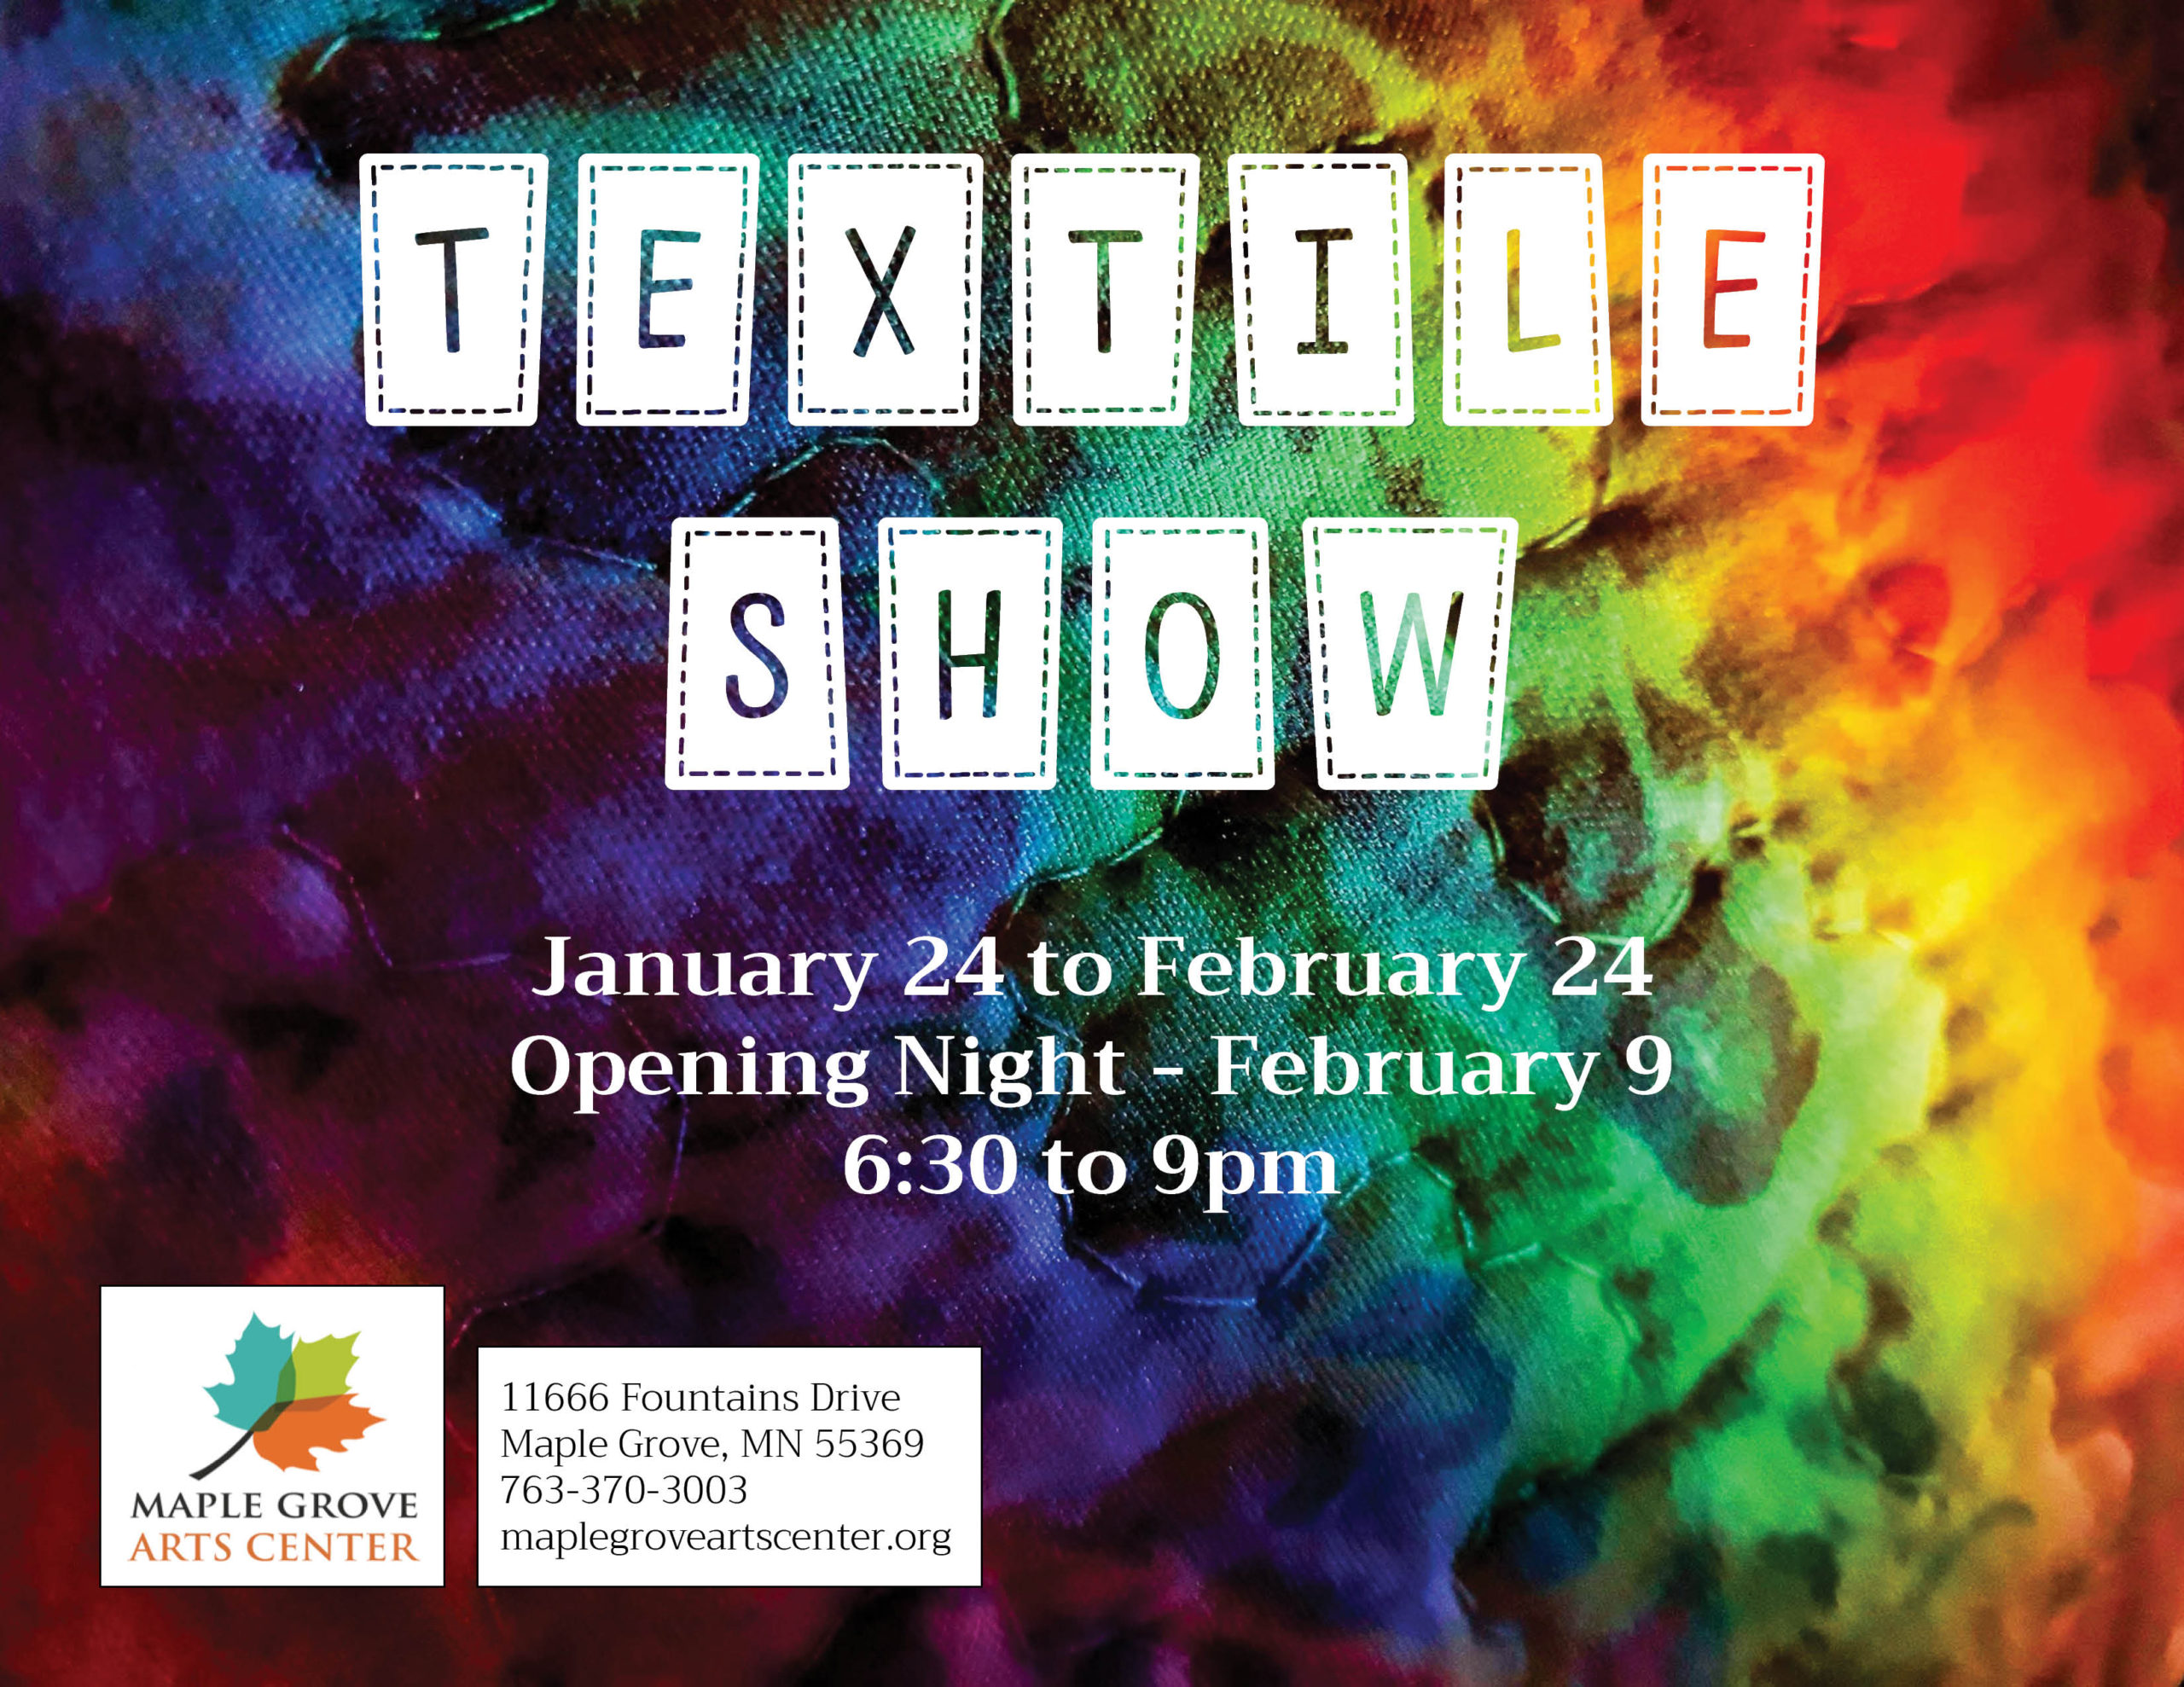 The Textile Show